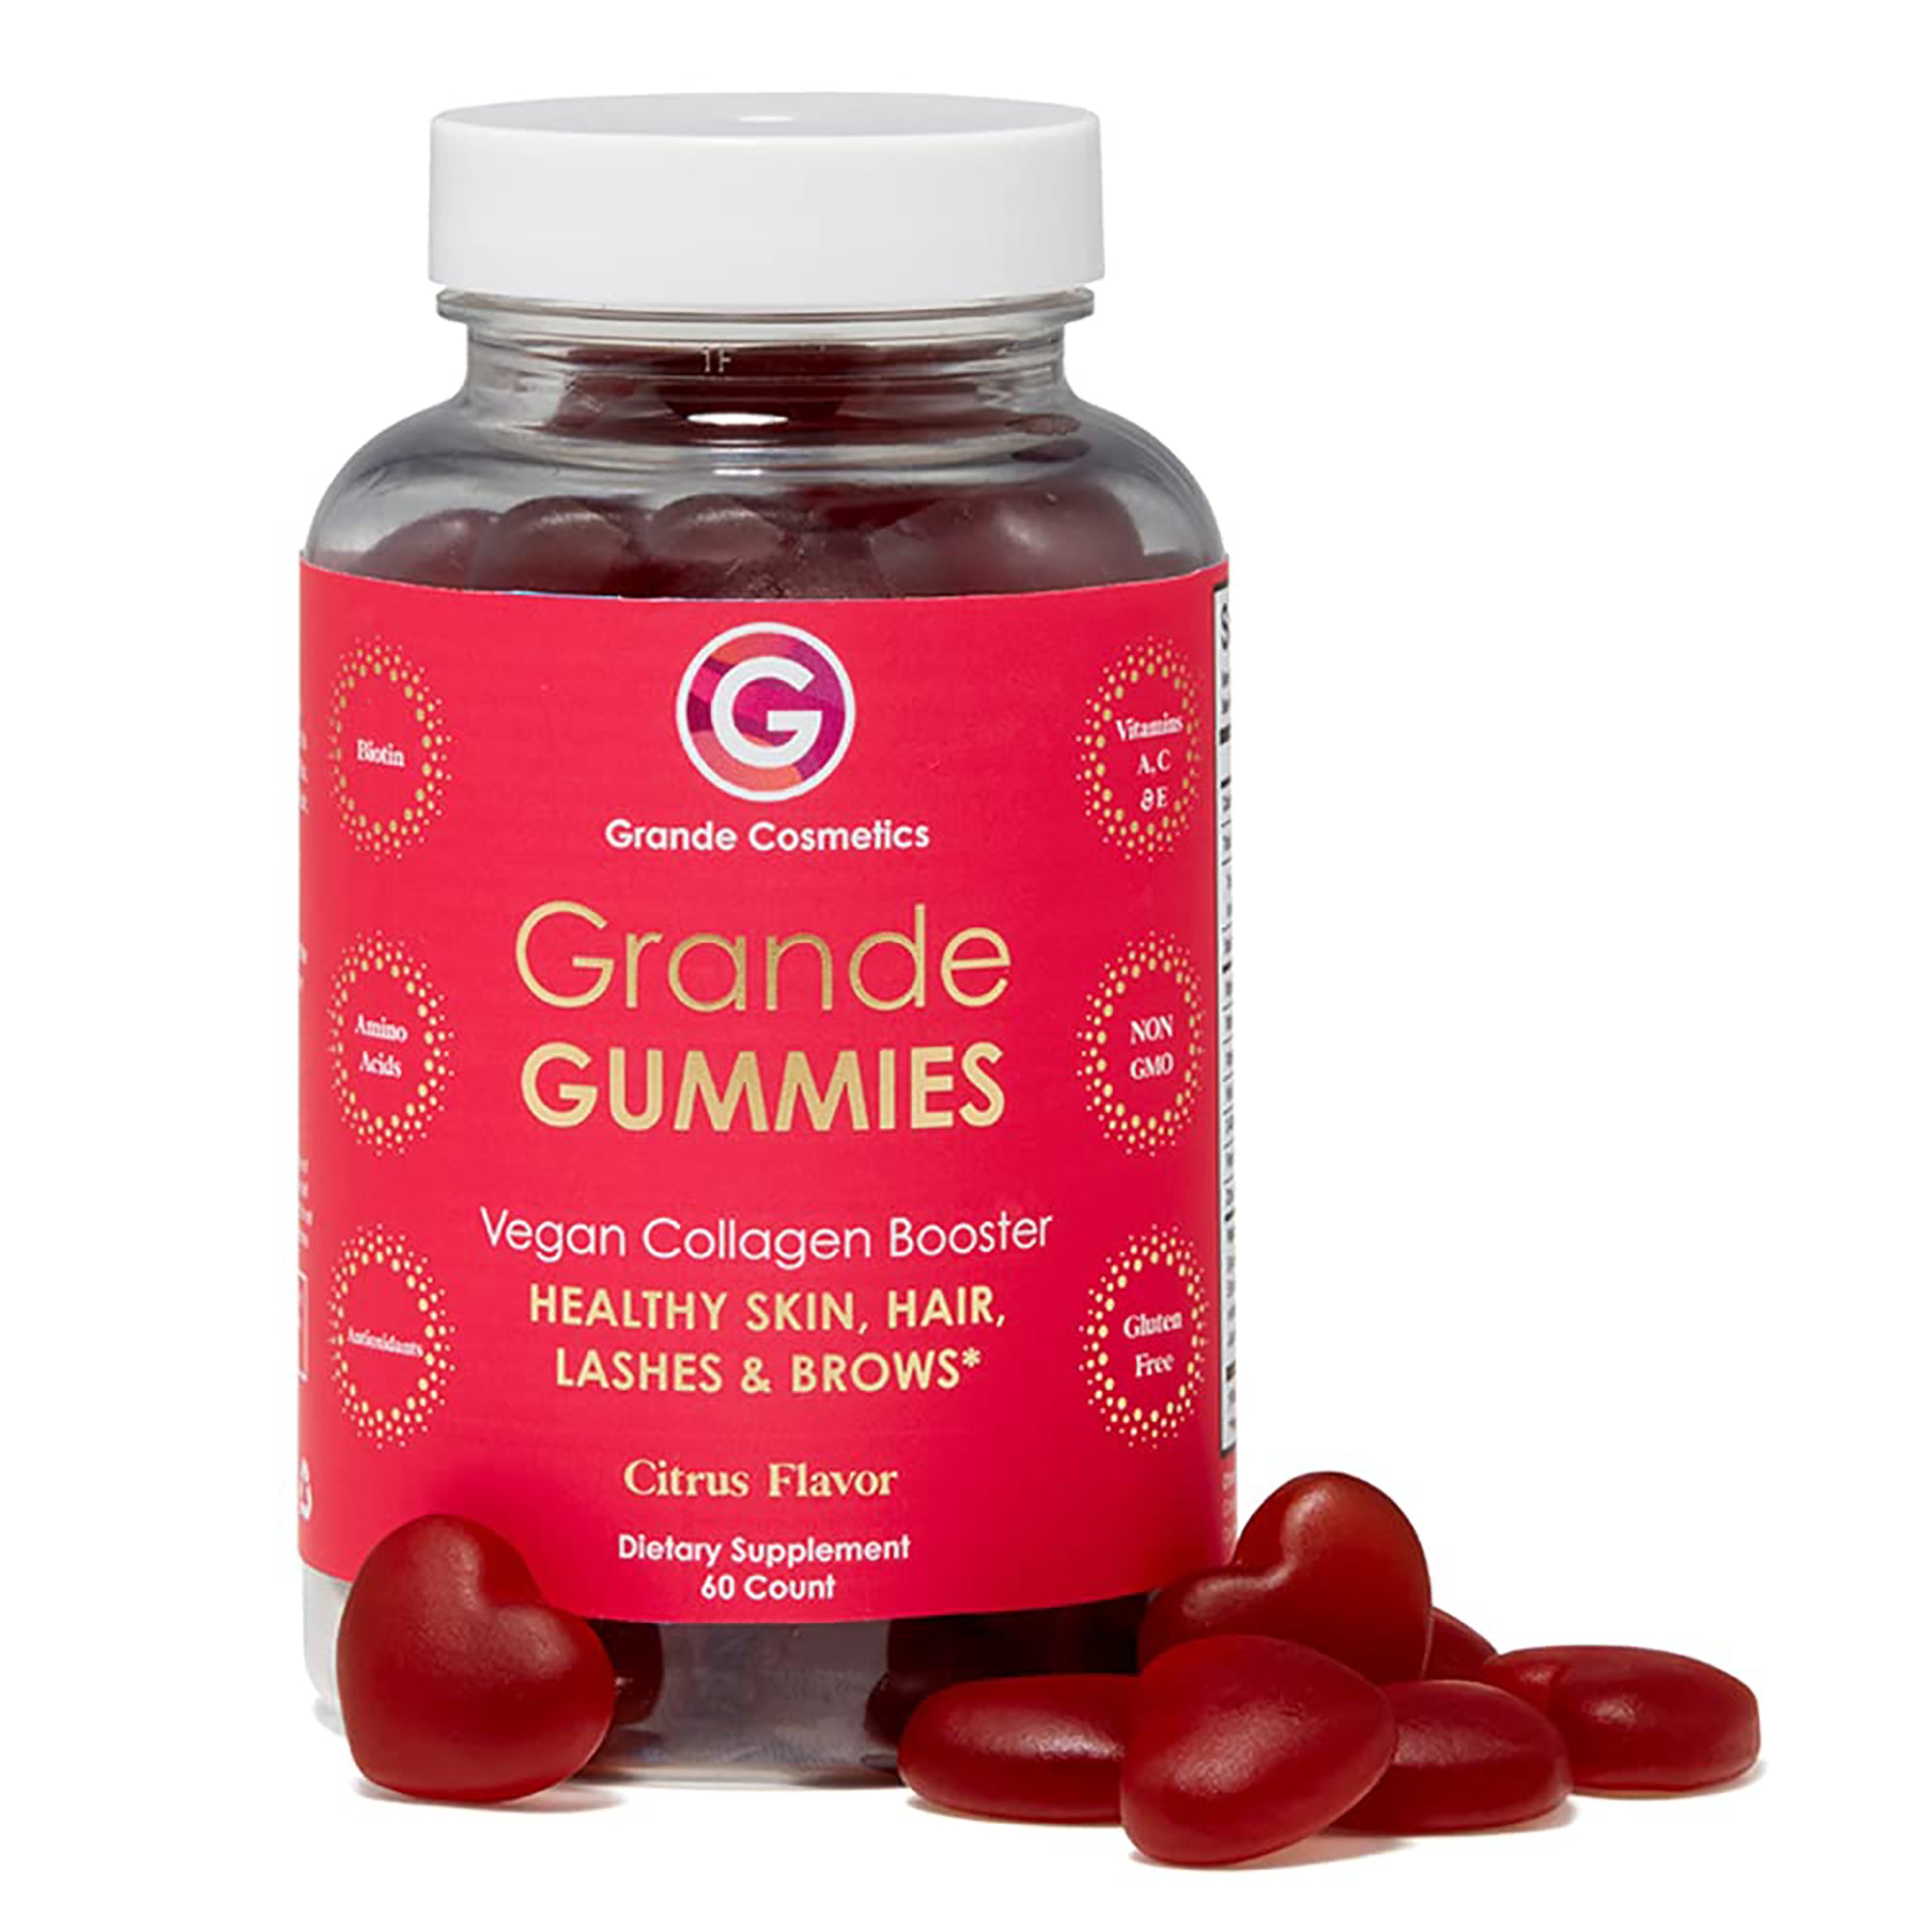 GrandeGUMMIES Vegan Collagen Booster Gummy / 60CT